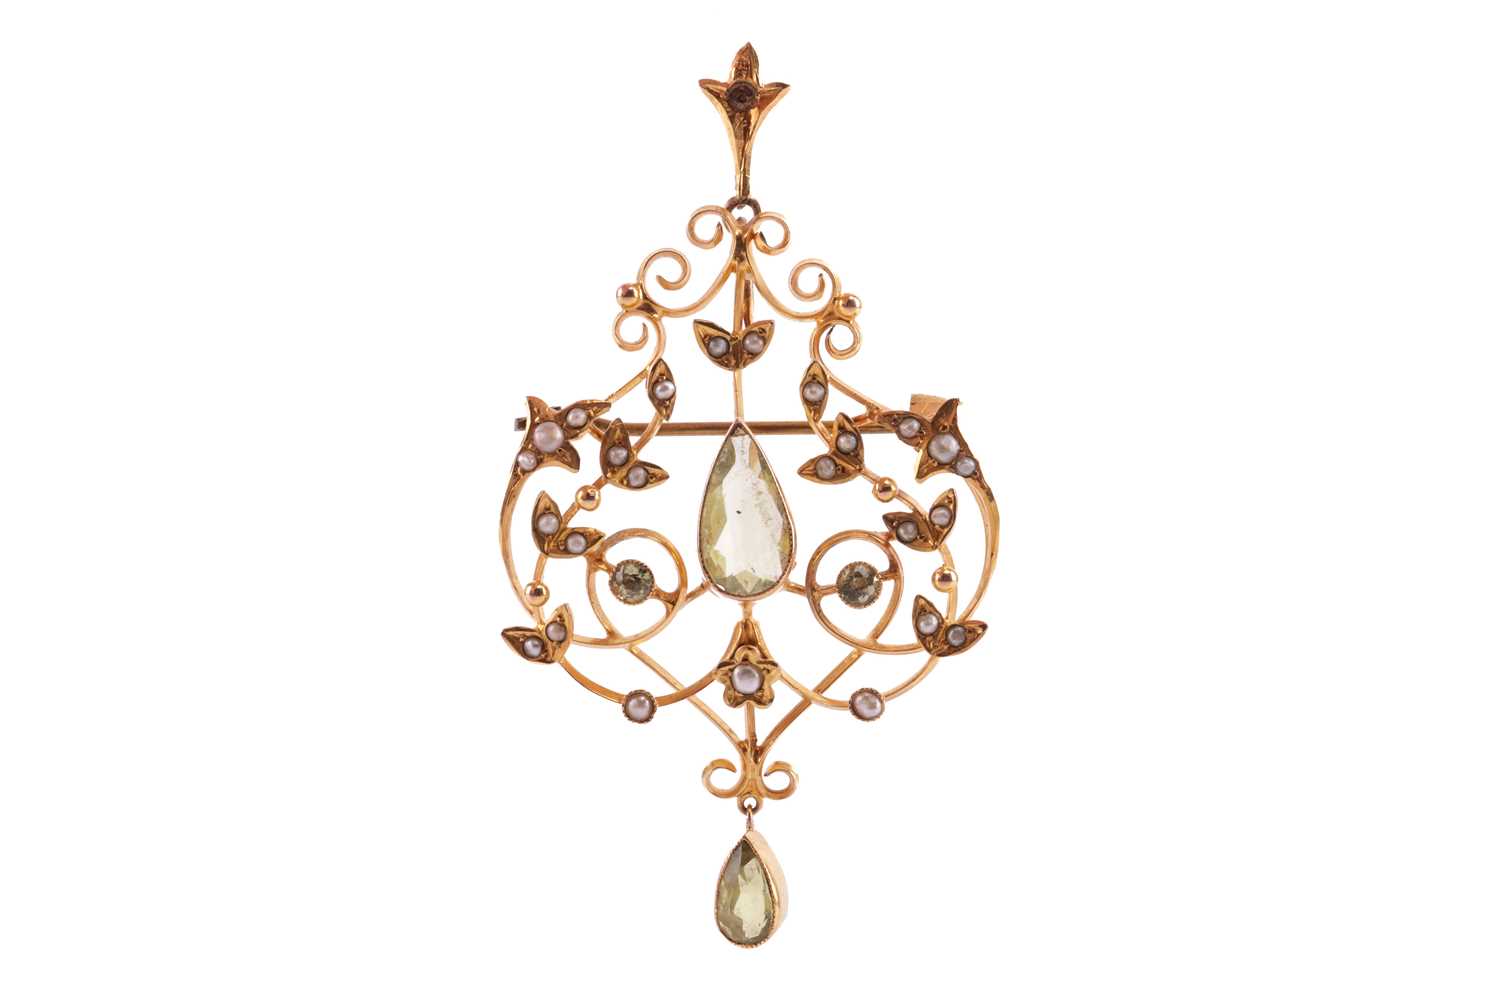 An Edwardian peridot and seed pearl guirlande brooch-cum-pendant, featuring a pear-shaped peridot, c